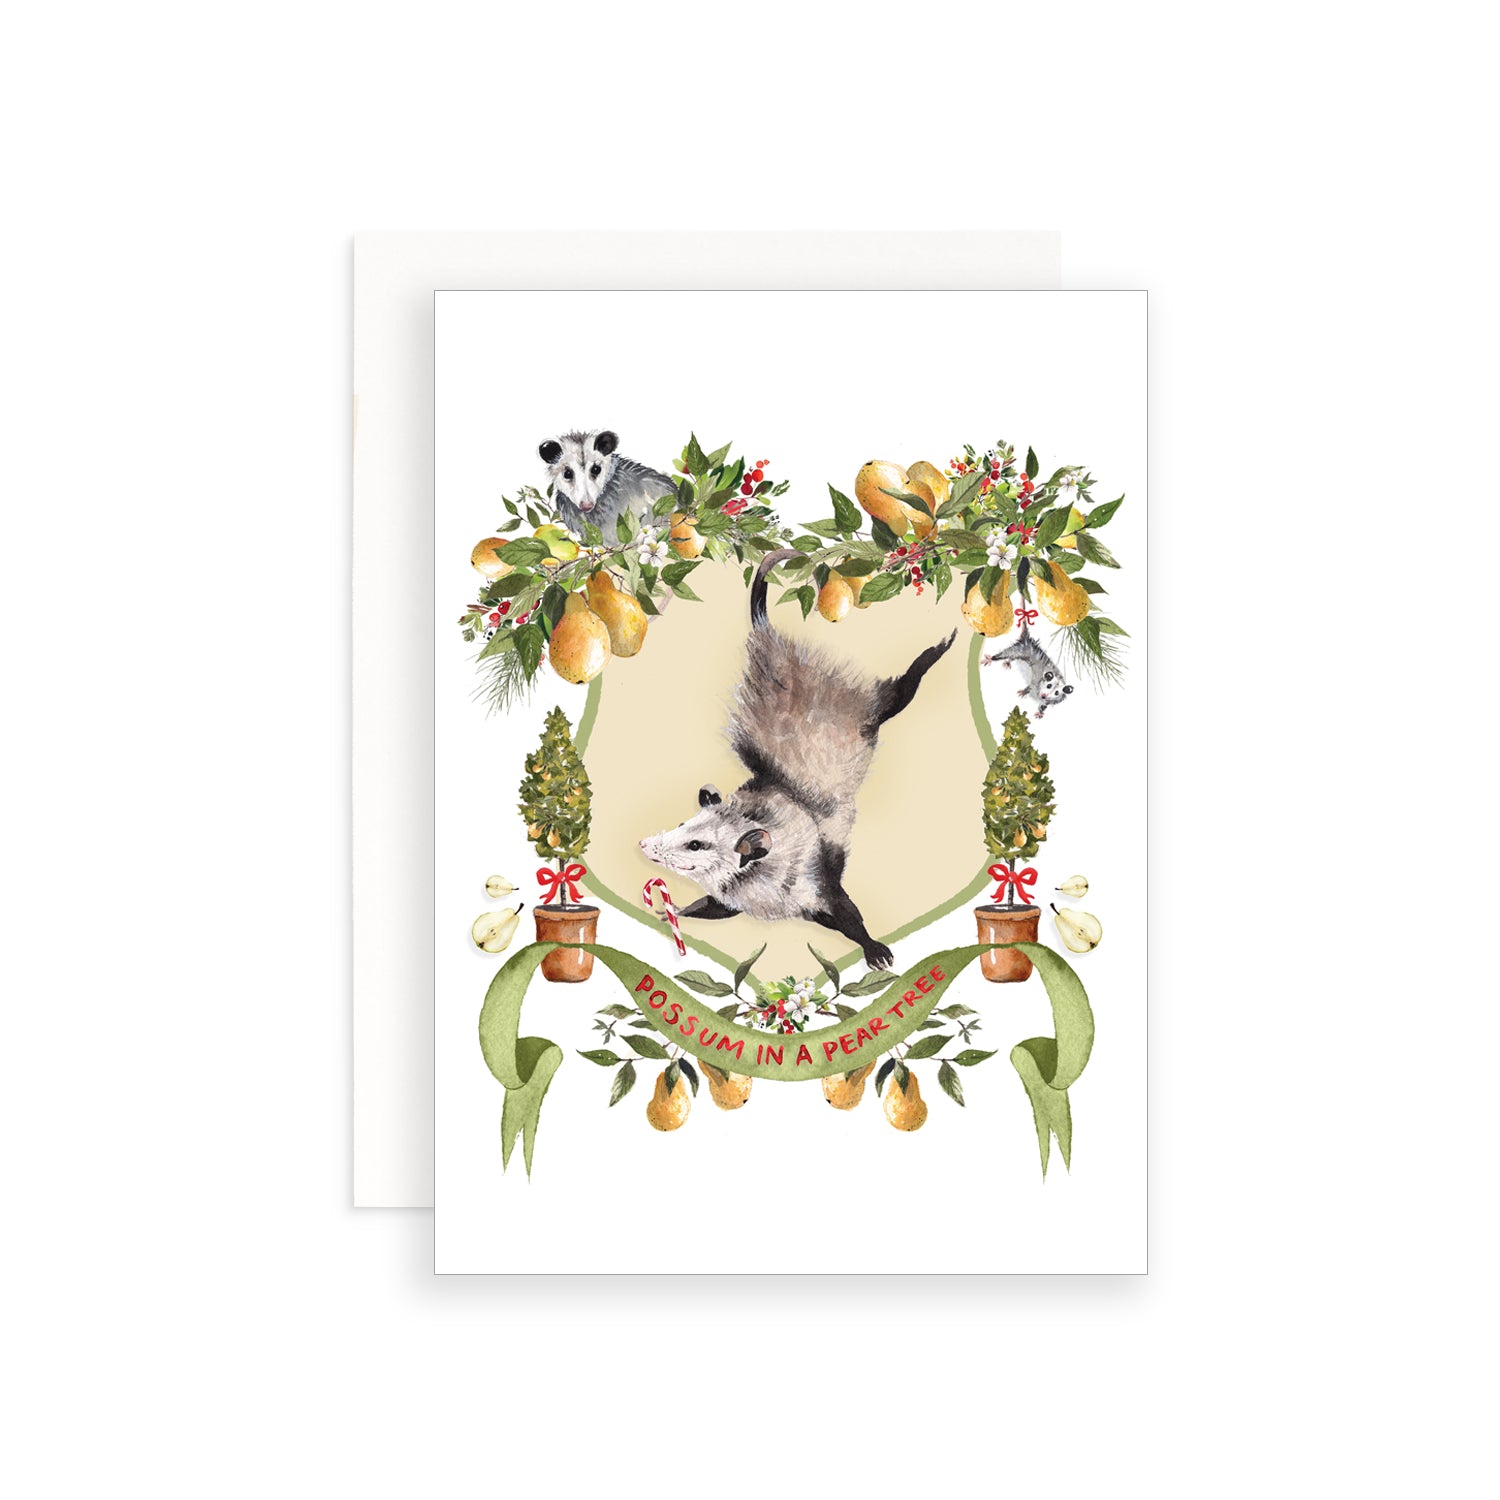 Possum in a Pear Tree Greeting Card